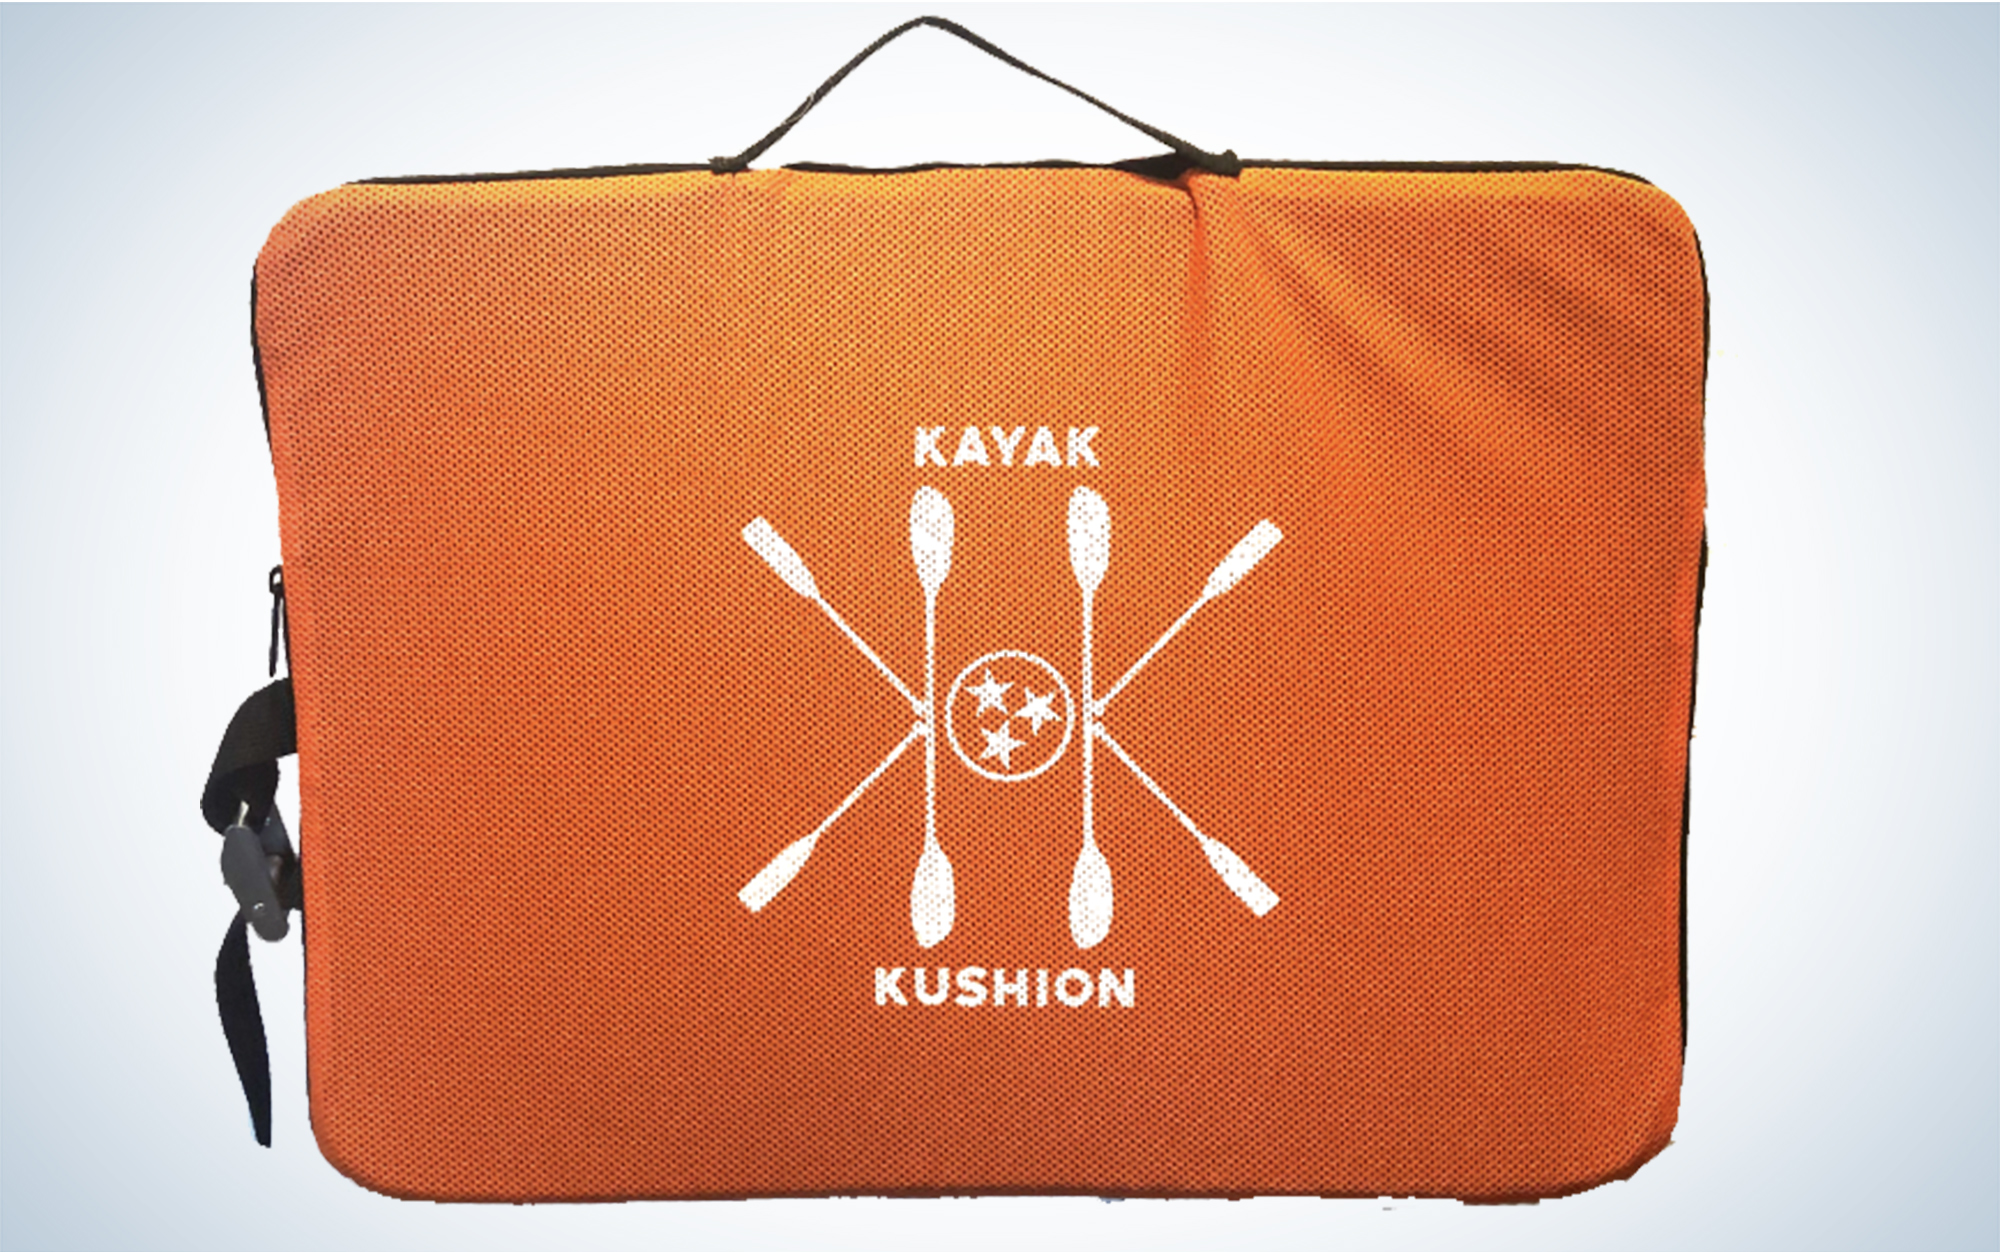 Native Kayak Kushion